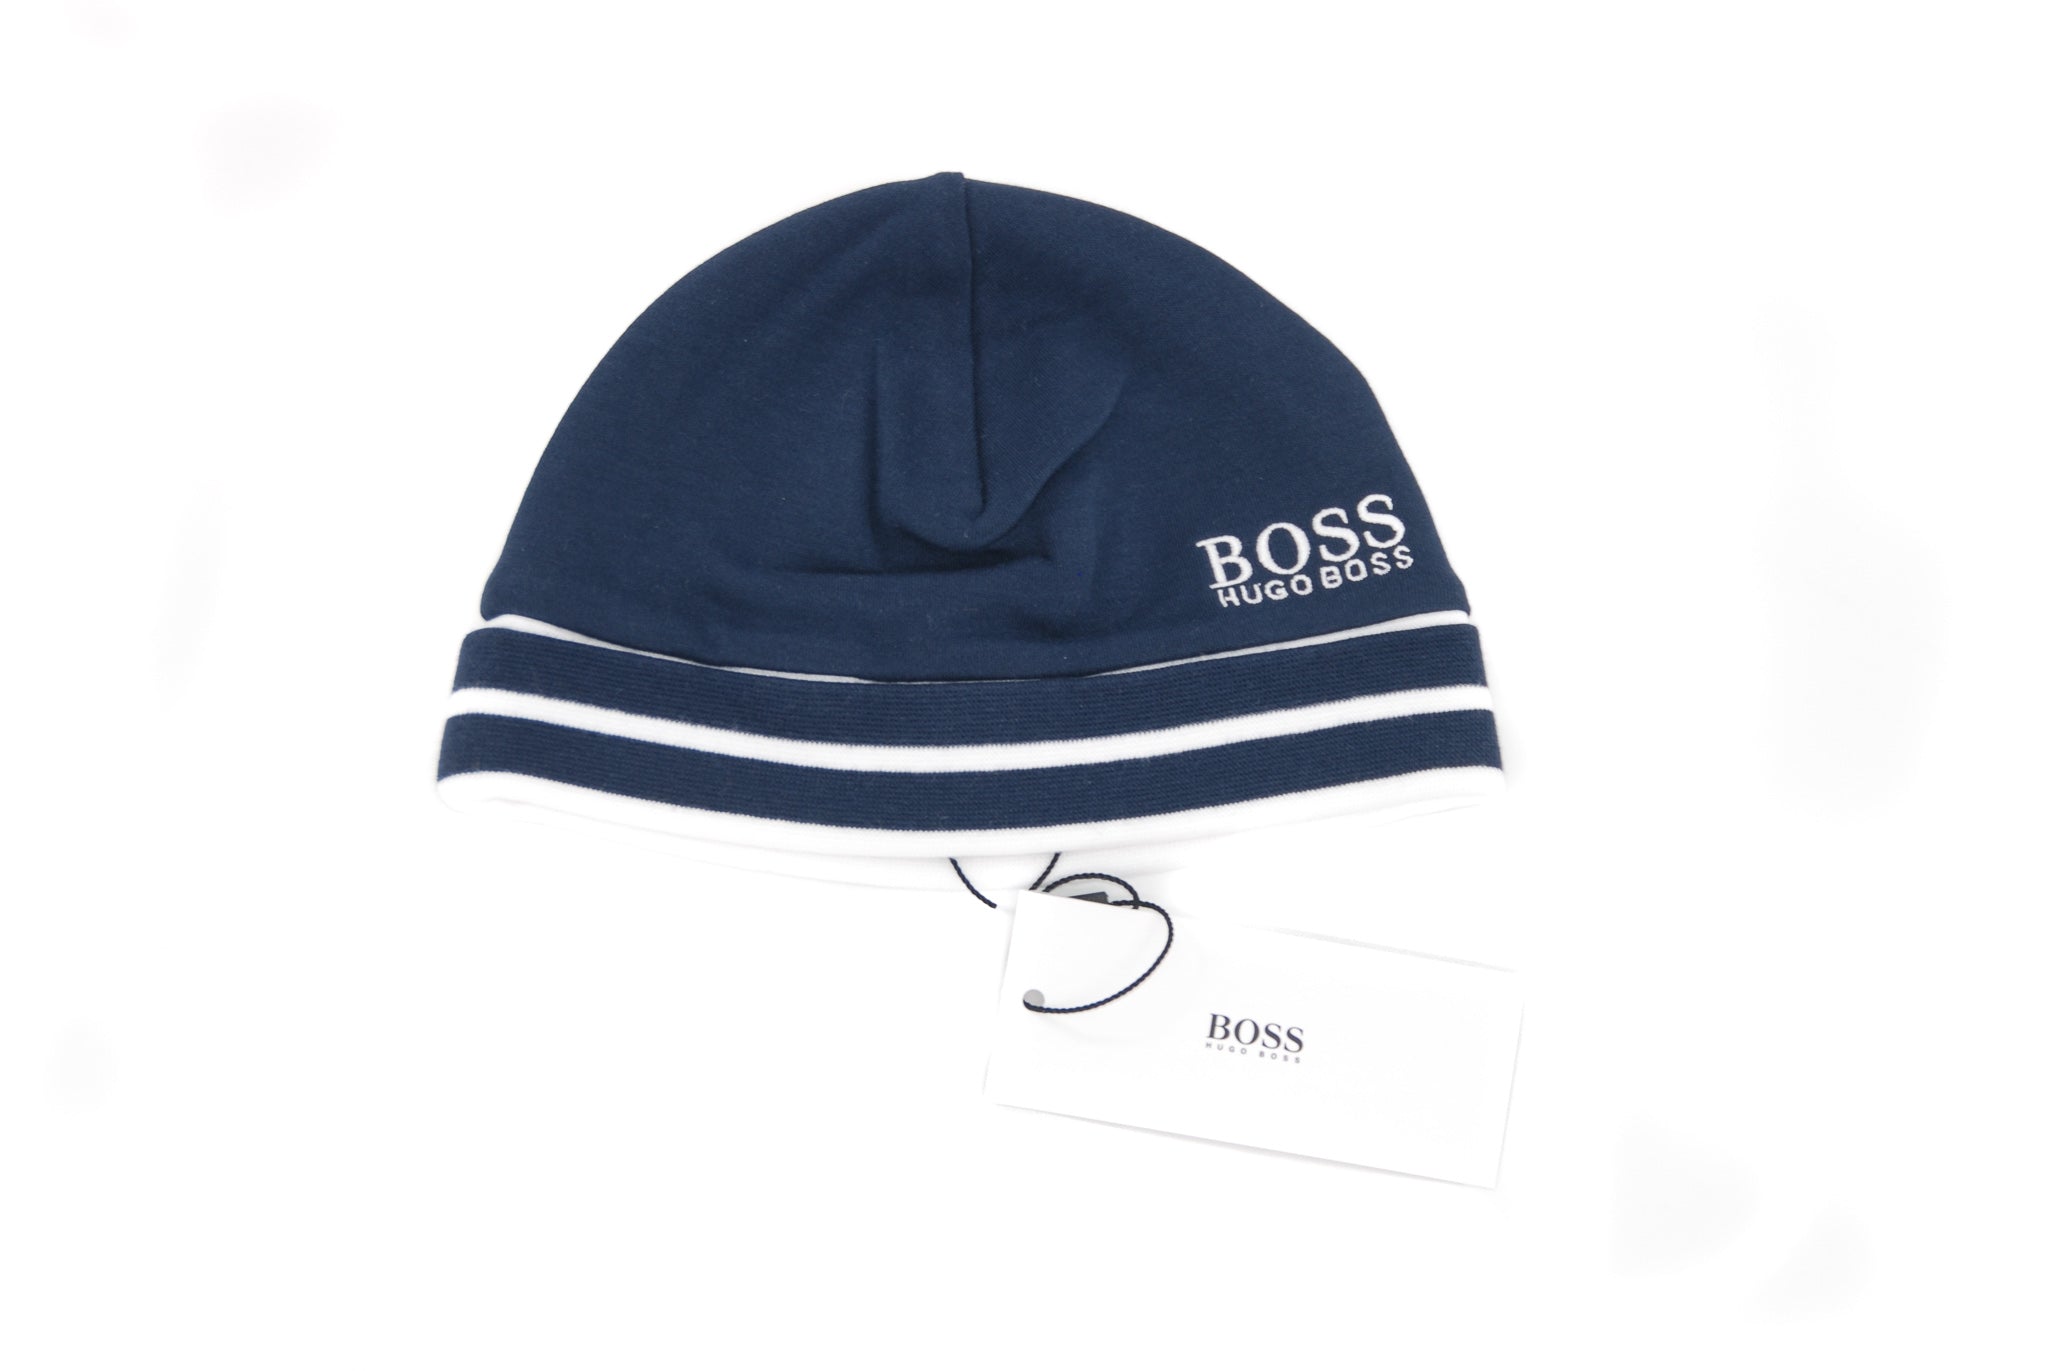 boys hugo boss hat